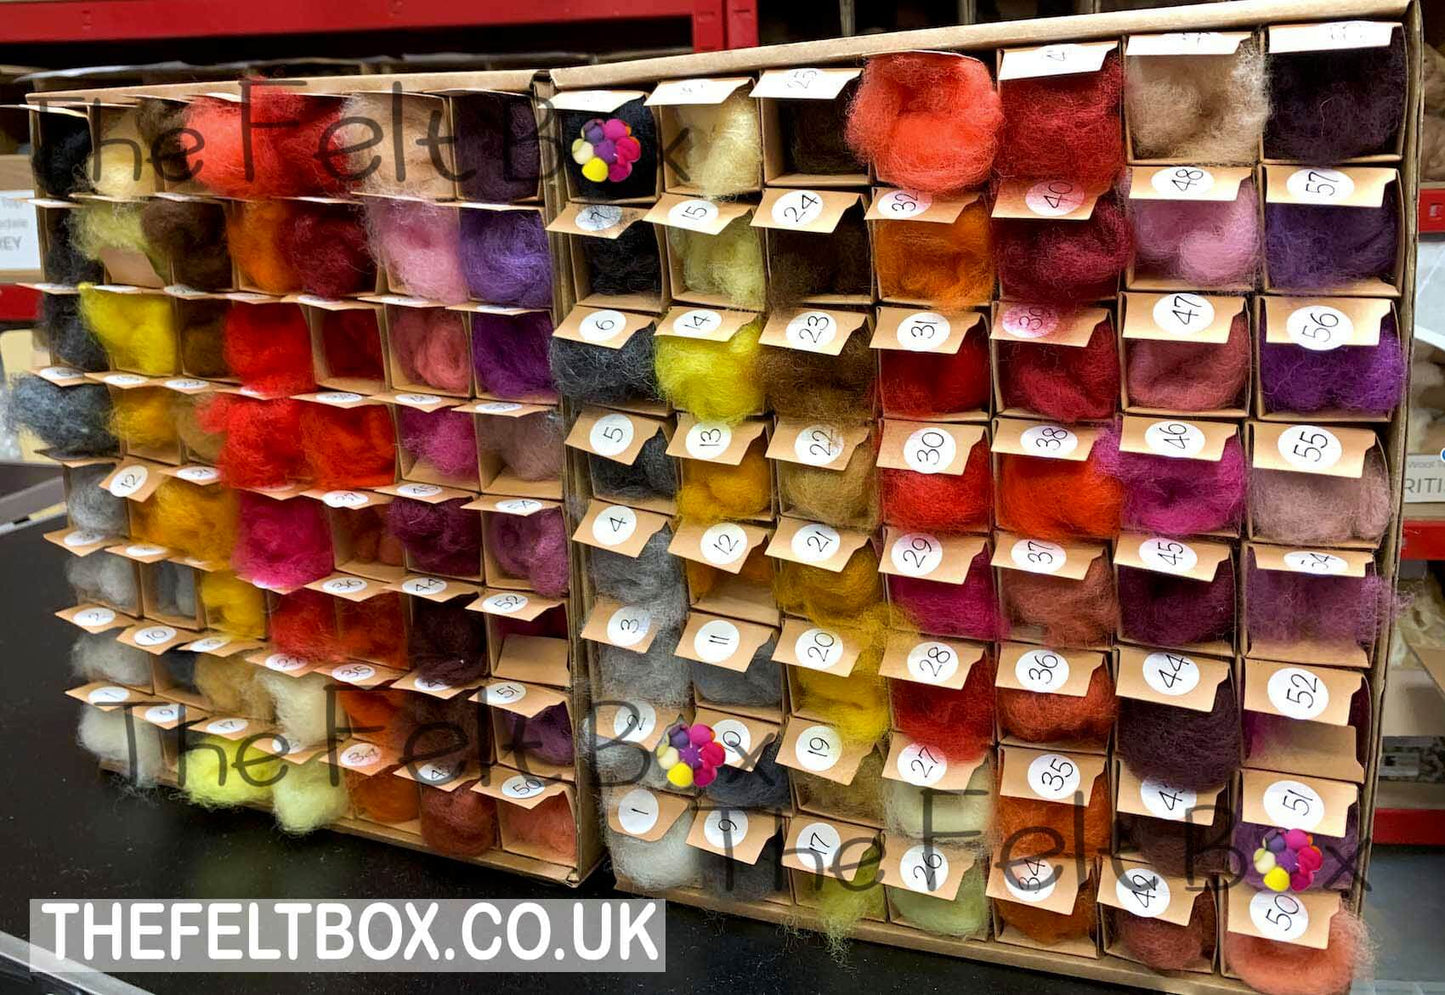 Carded Felting Wool Multi Colour Set Needle Painting Palette The Felt Box ® 111 pc